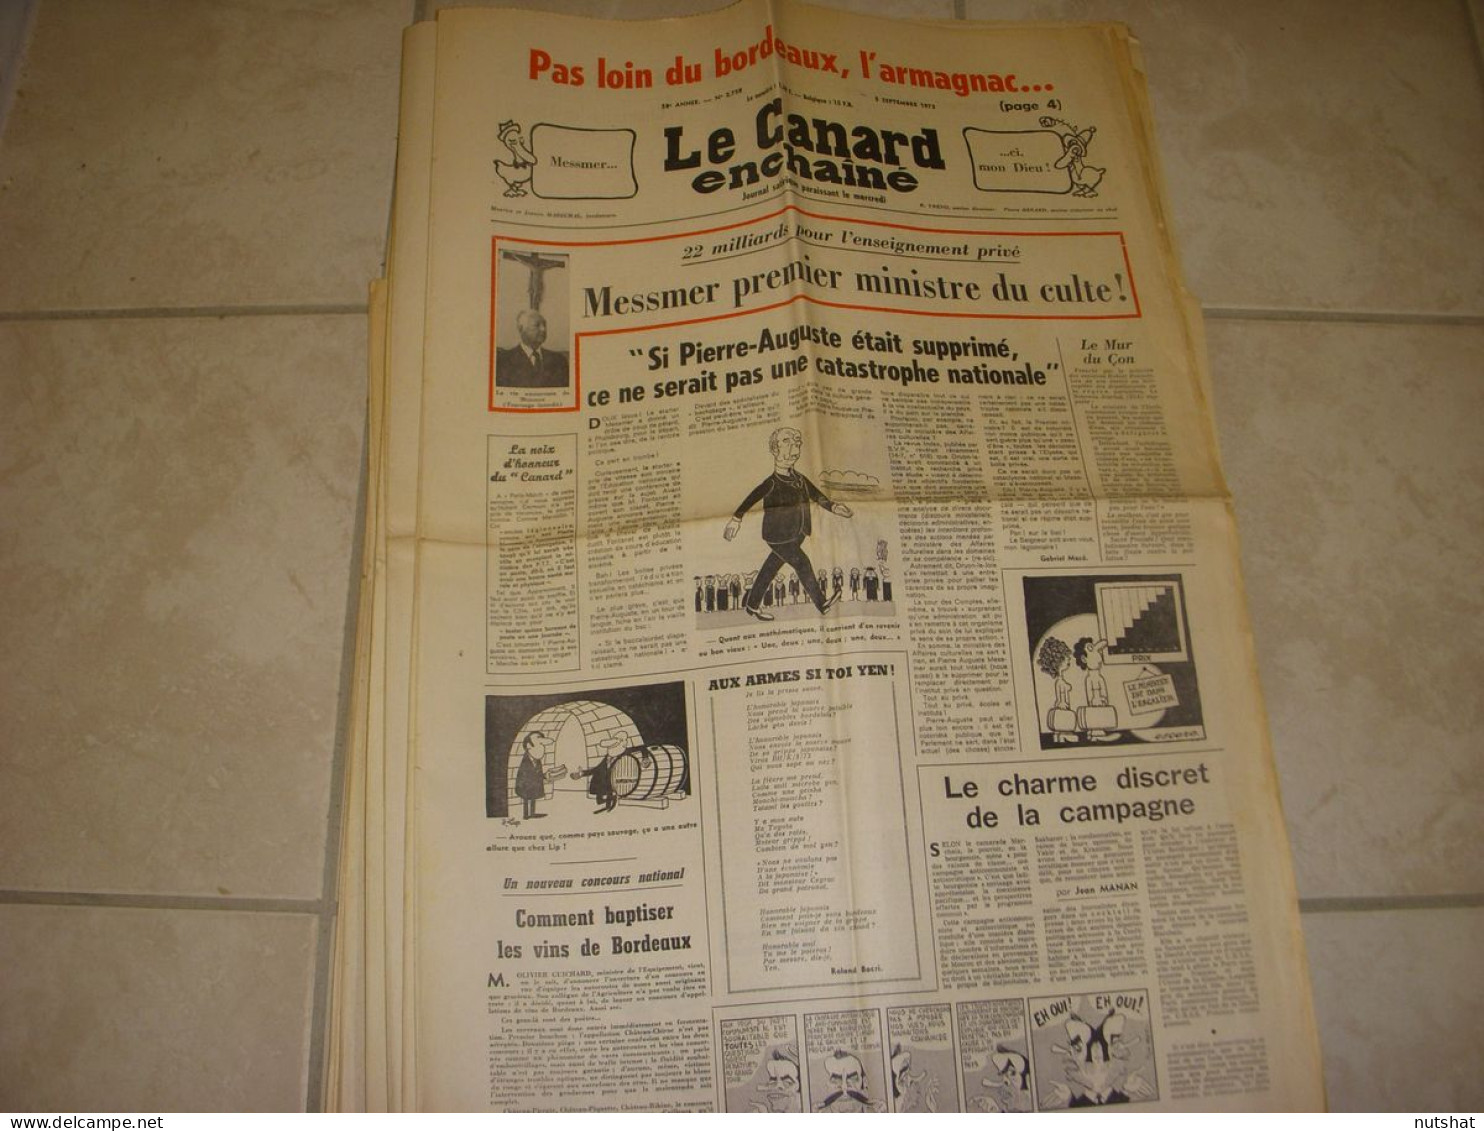 CANARD ENCHAINE 2758 05.09.1973 Le MLF Michel POLAC Benigno CACERES Guy LUX - Politique